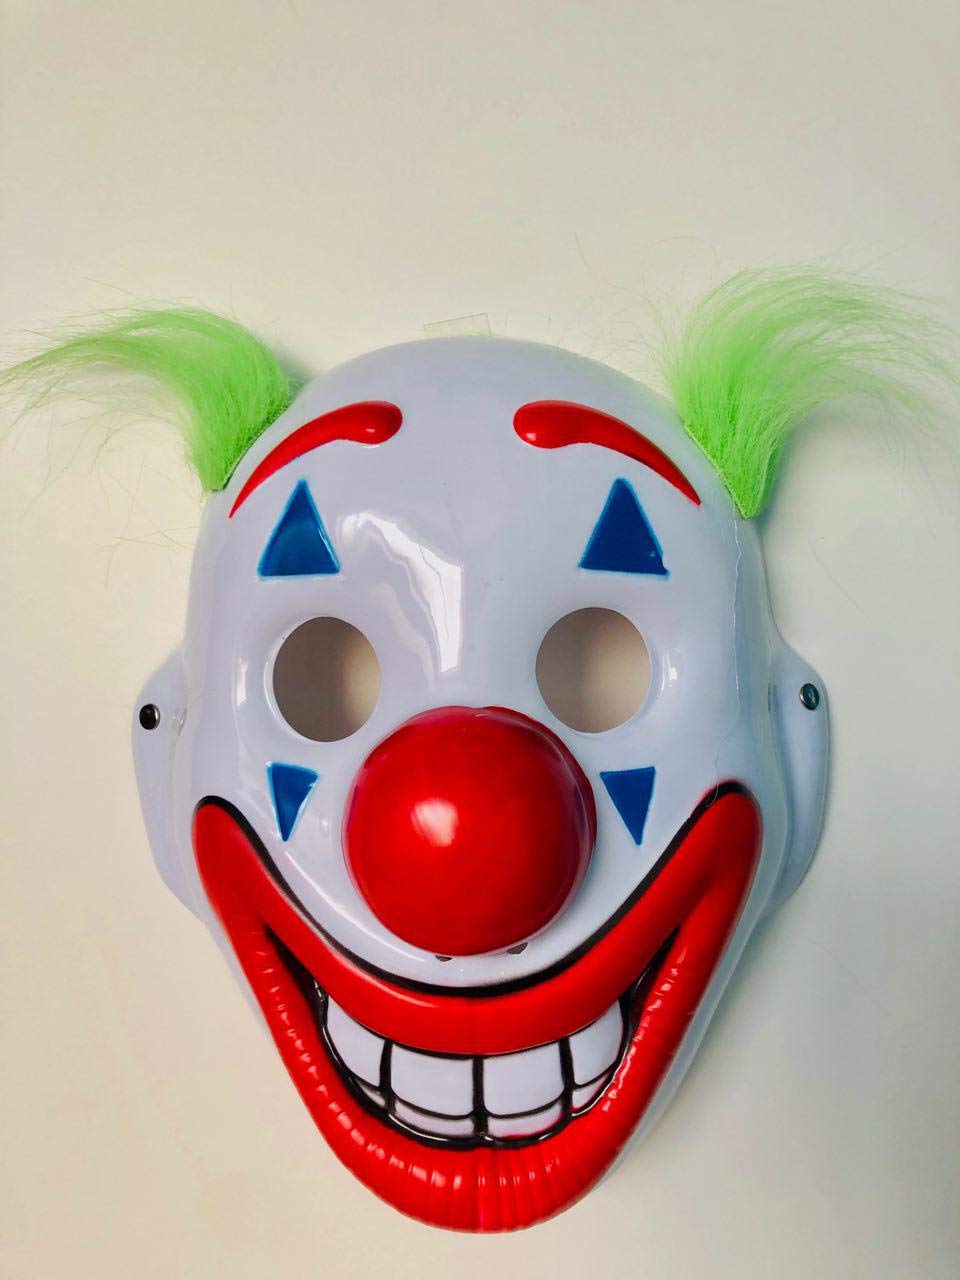 PartyGears Maschera Halloween Joker Film 2019 PVC Cosplay Rivoluzione... - Ilgrandebazar